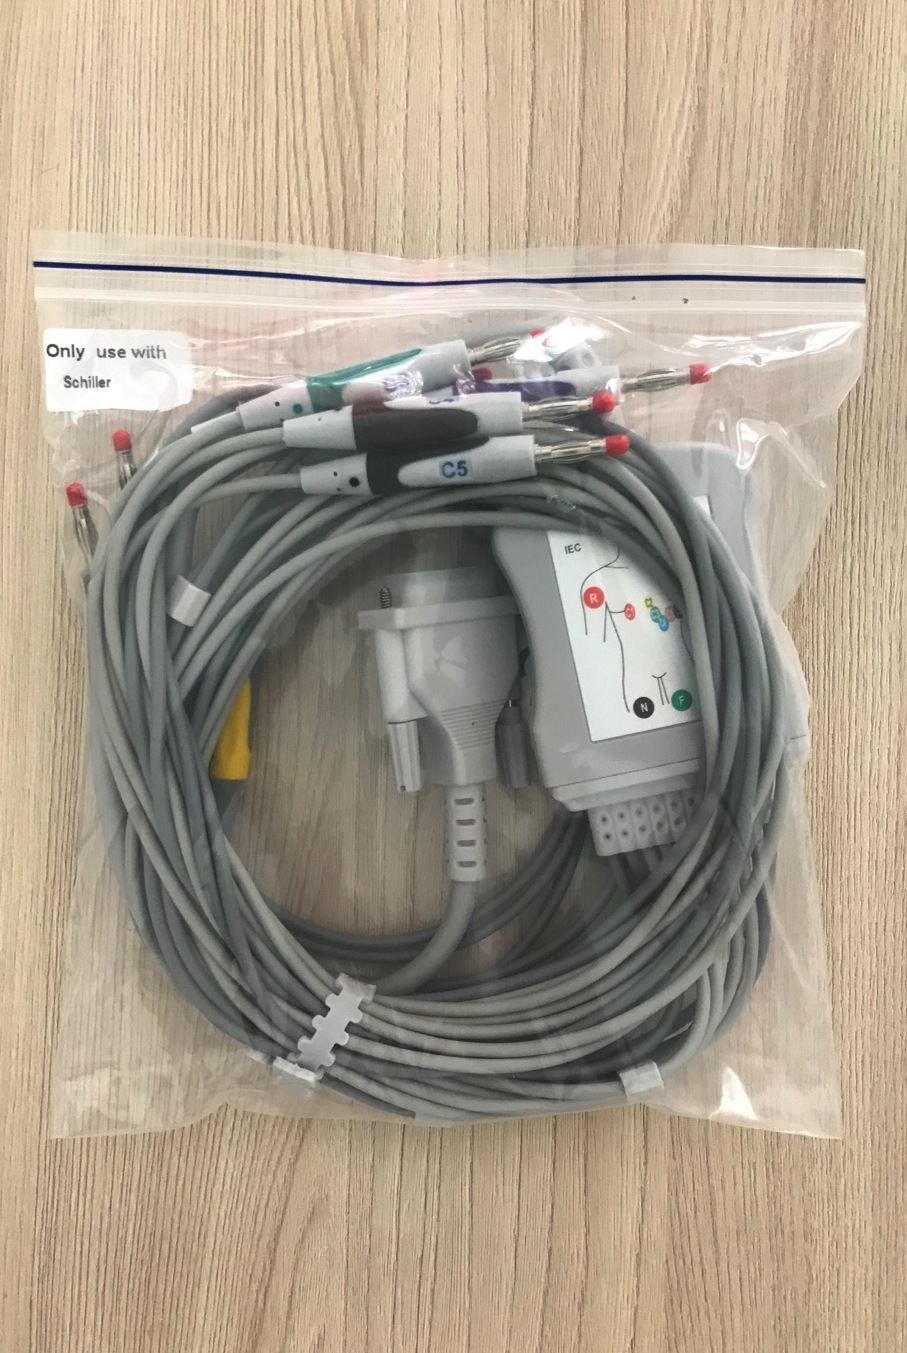 EKG Cable for EKG Recorder Unit Schiller_สายอีเคจีเคเบิ้ลสำหรับเครื่องวัดบันทึกค่าคลื่นไฟฟ้าหัวใจ Schiller